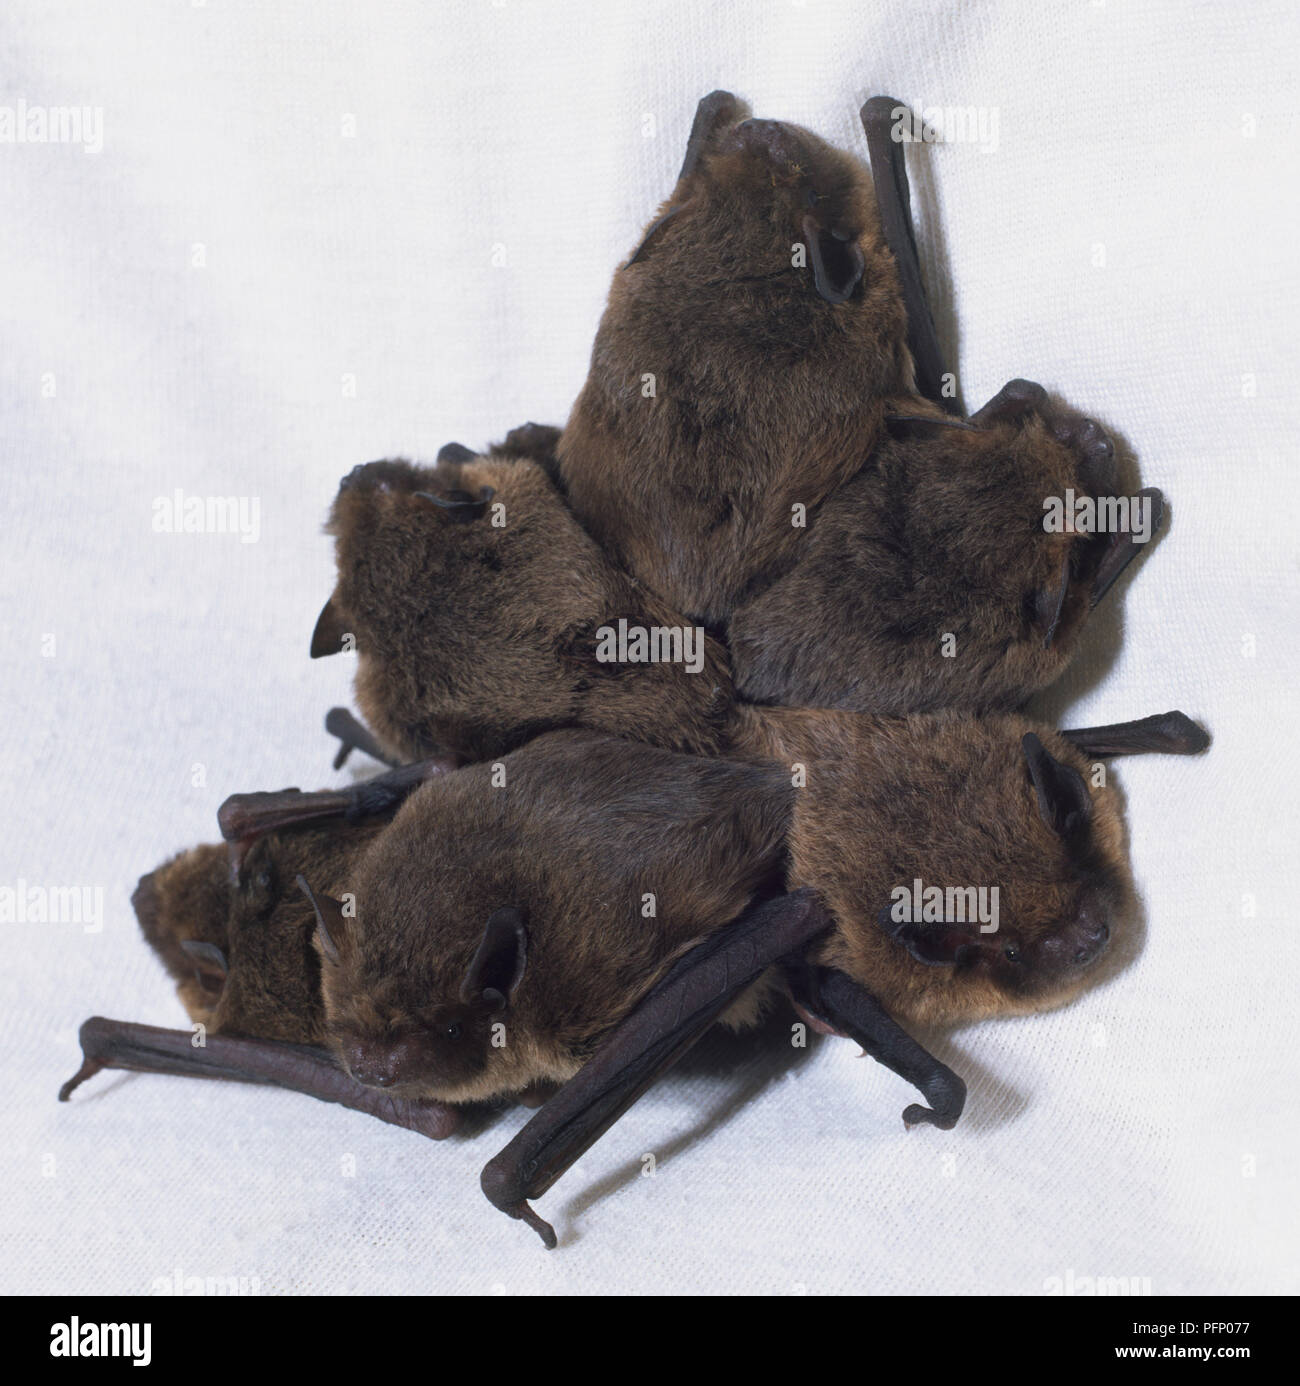 Six Common Pipistrelle Bats huddled up together. Stock Photo